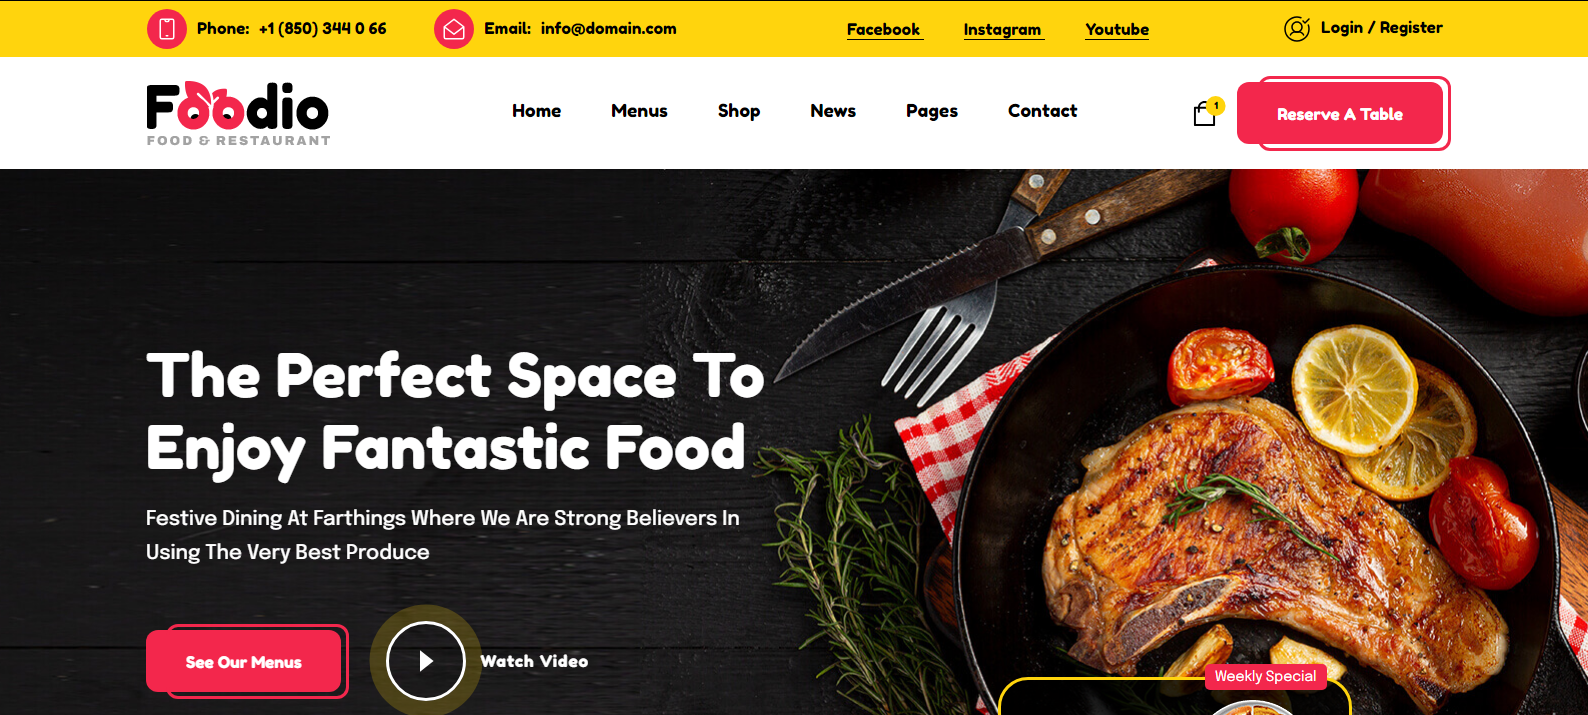 Foodio - Fast Food & Restaurant HTML Template